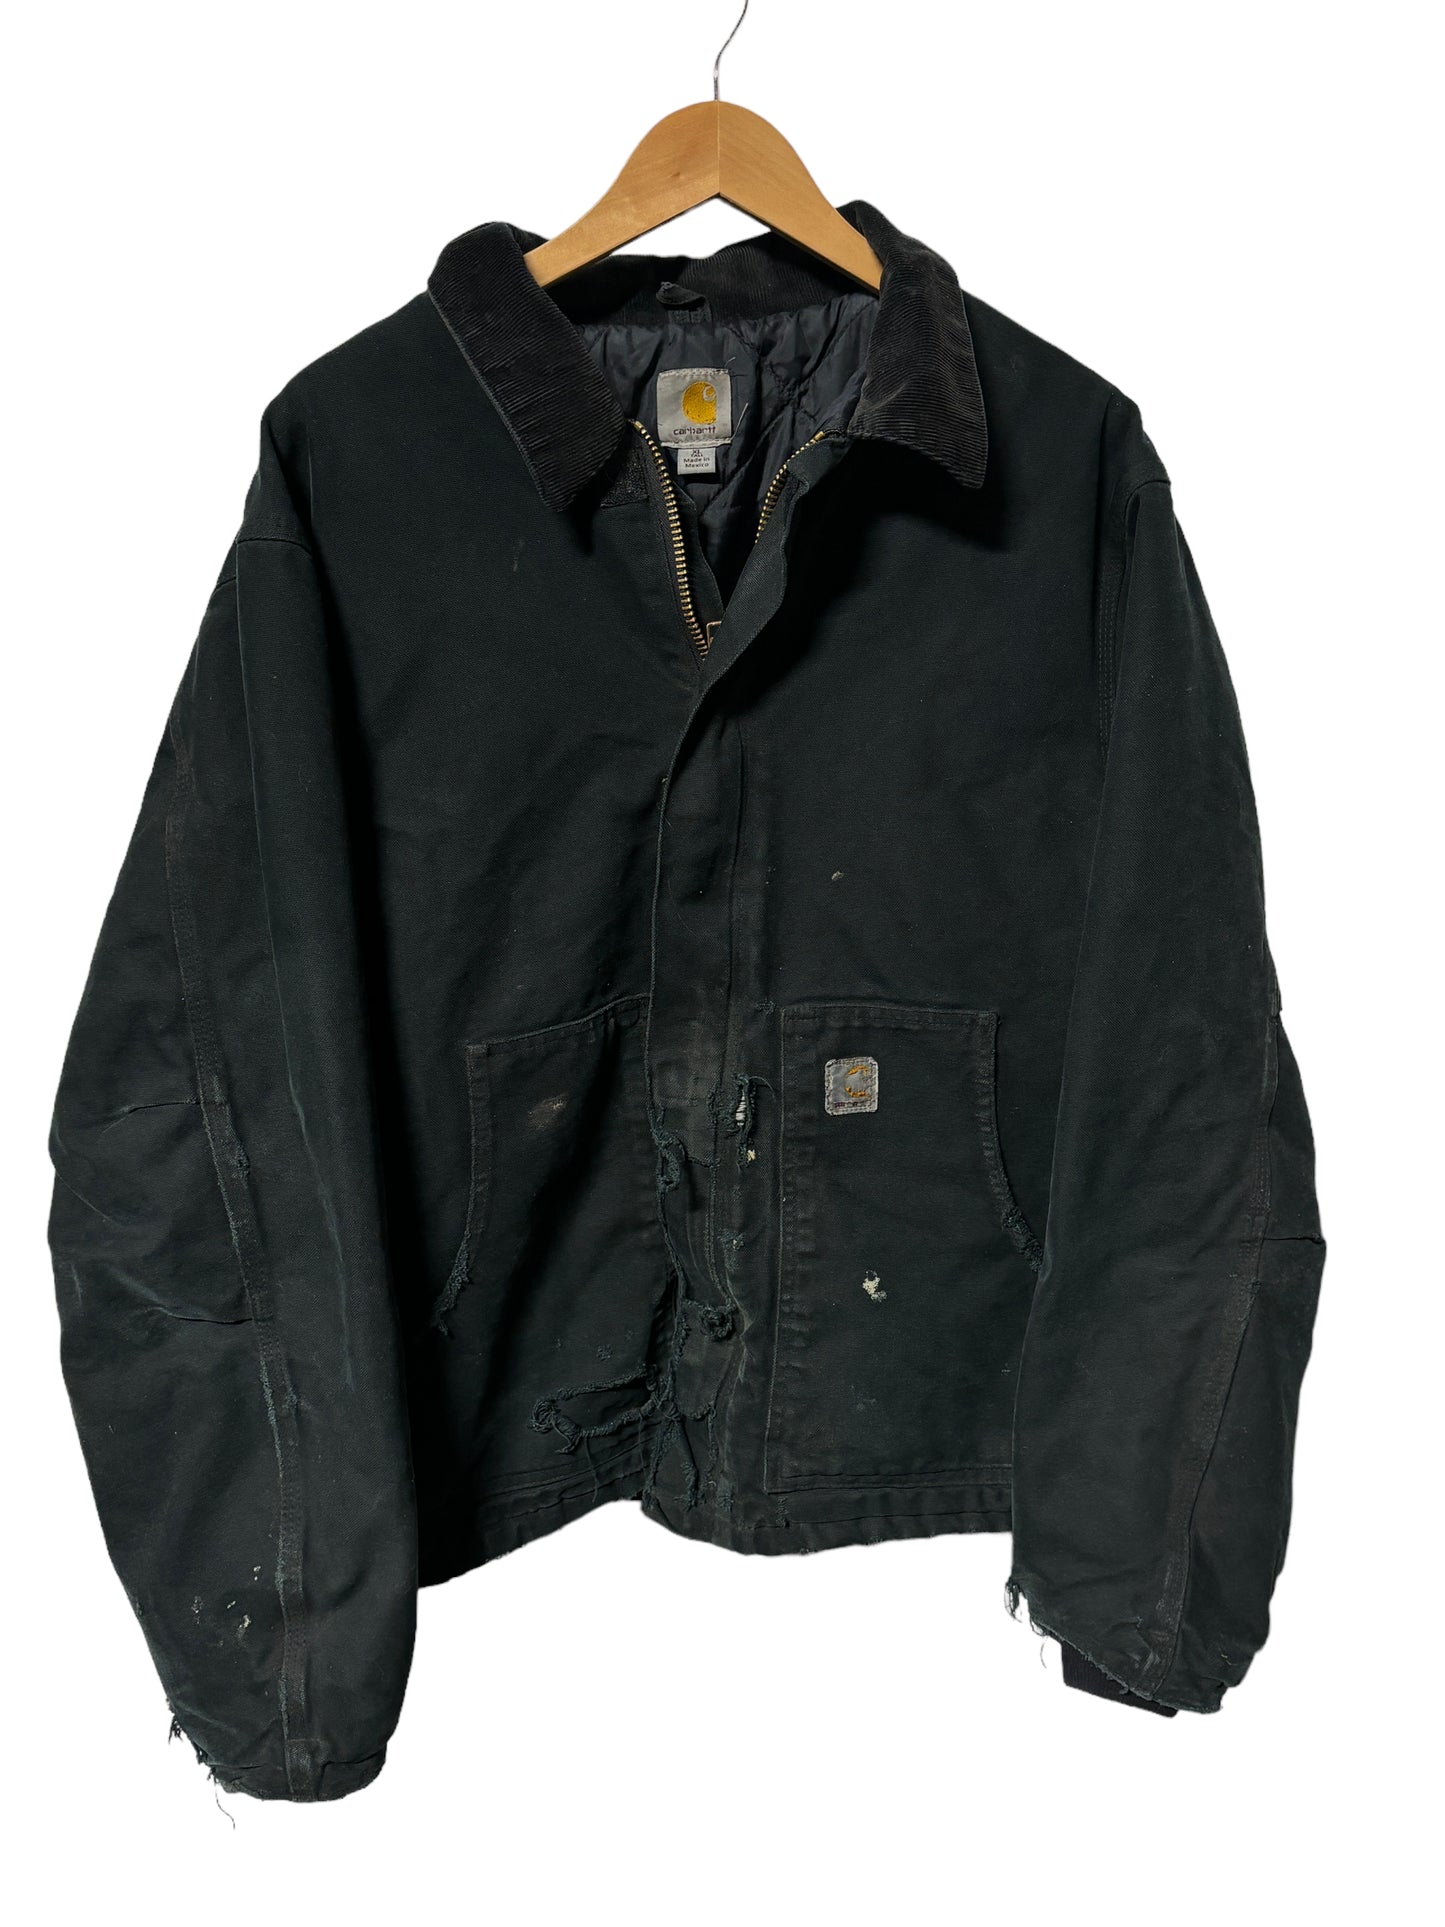 Vintage Carhartt J002 BLK Distressed Zip Up Work Jacket Size XL Tall